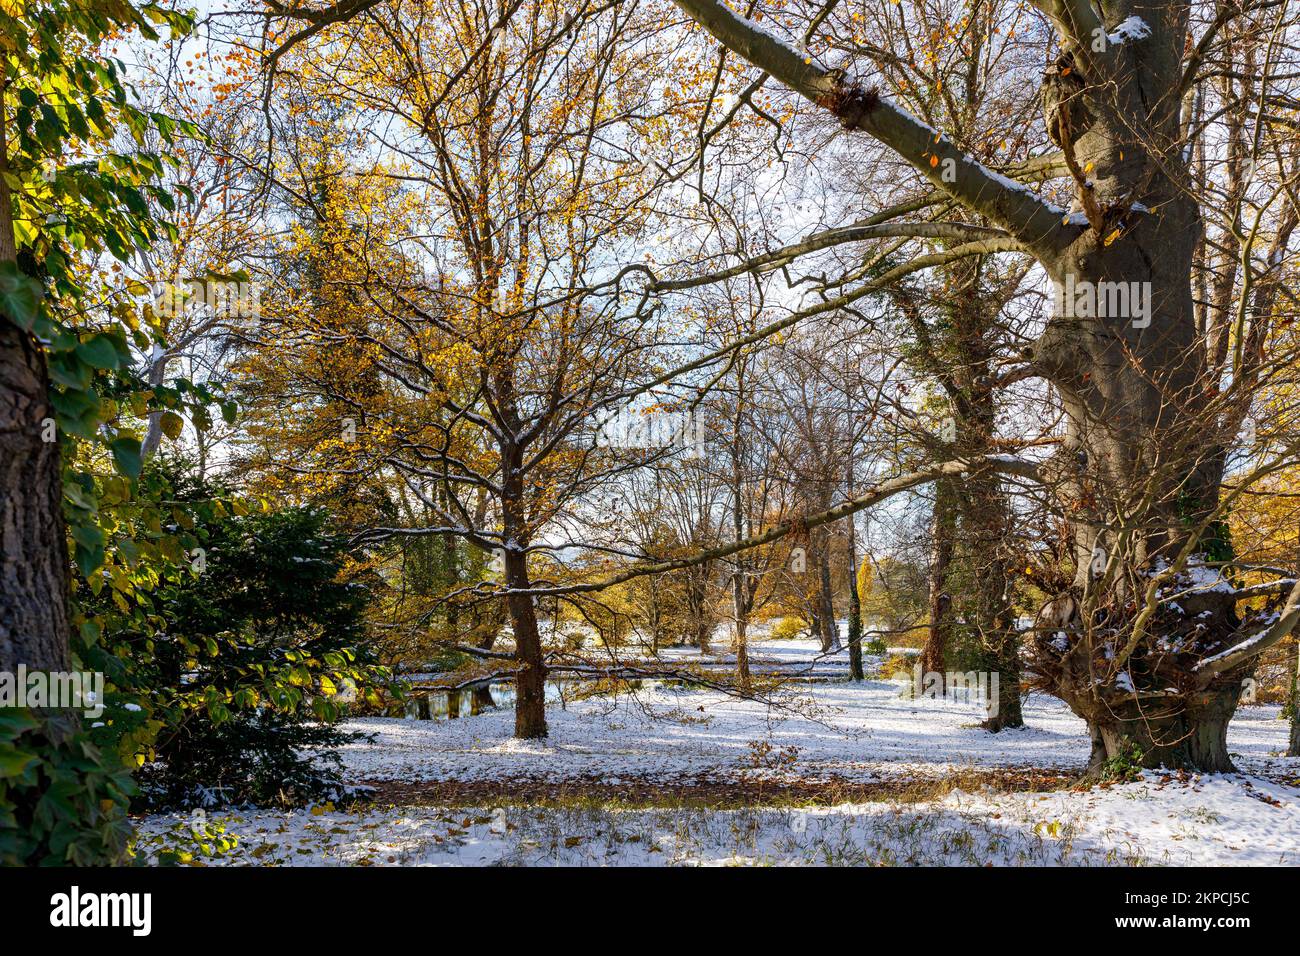 A landscape park in the winter season Stock Photo